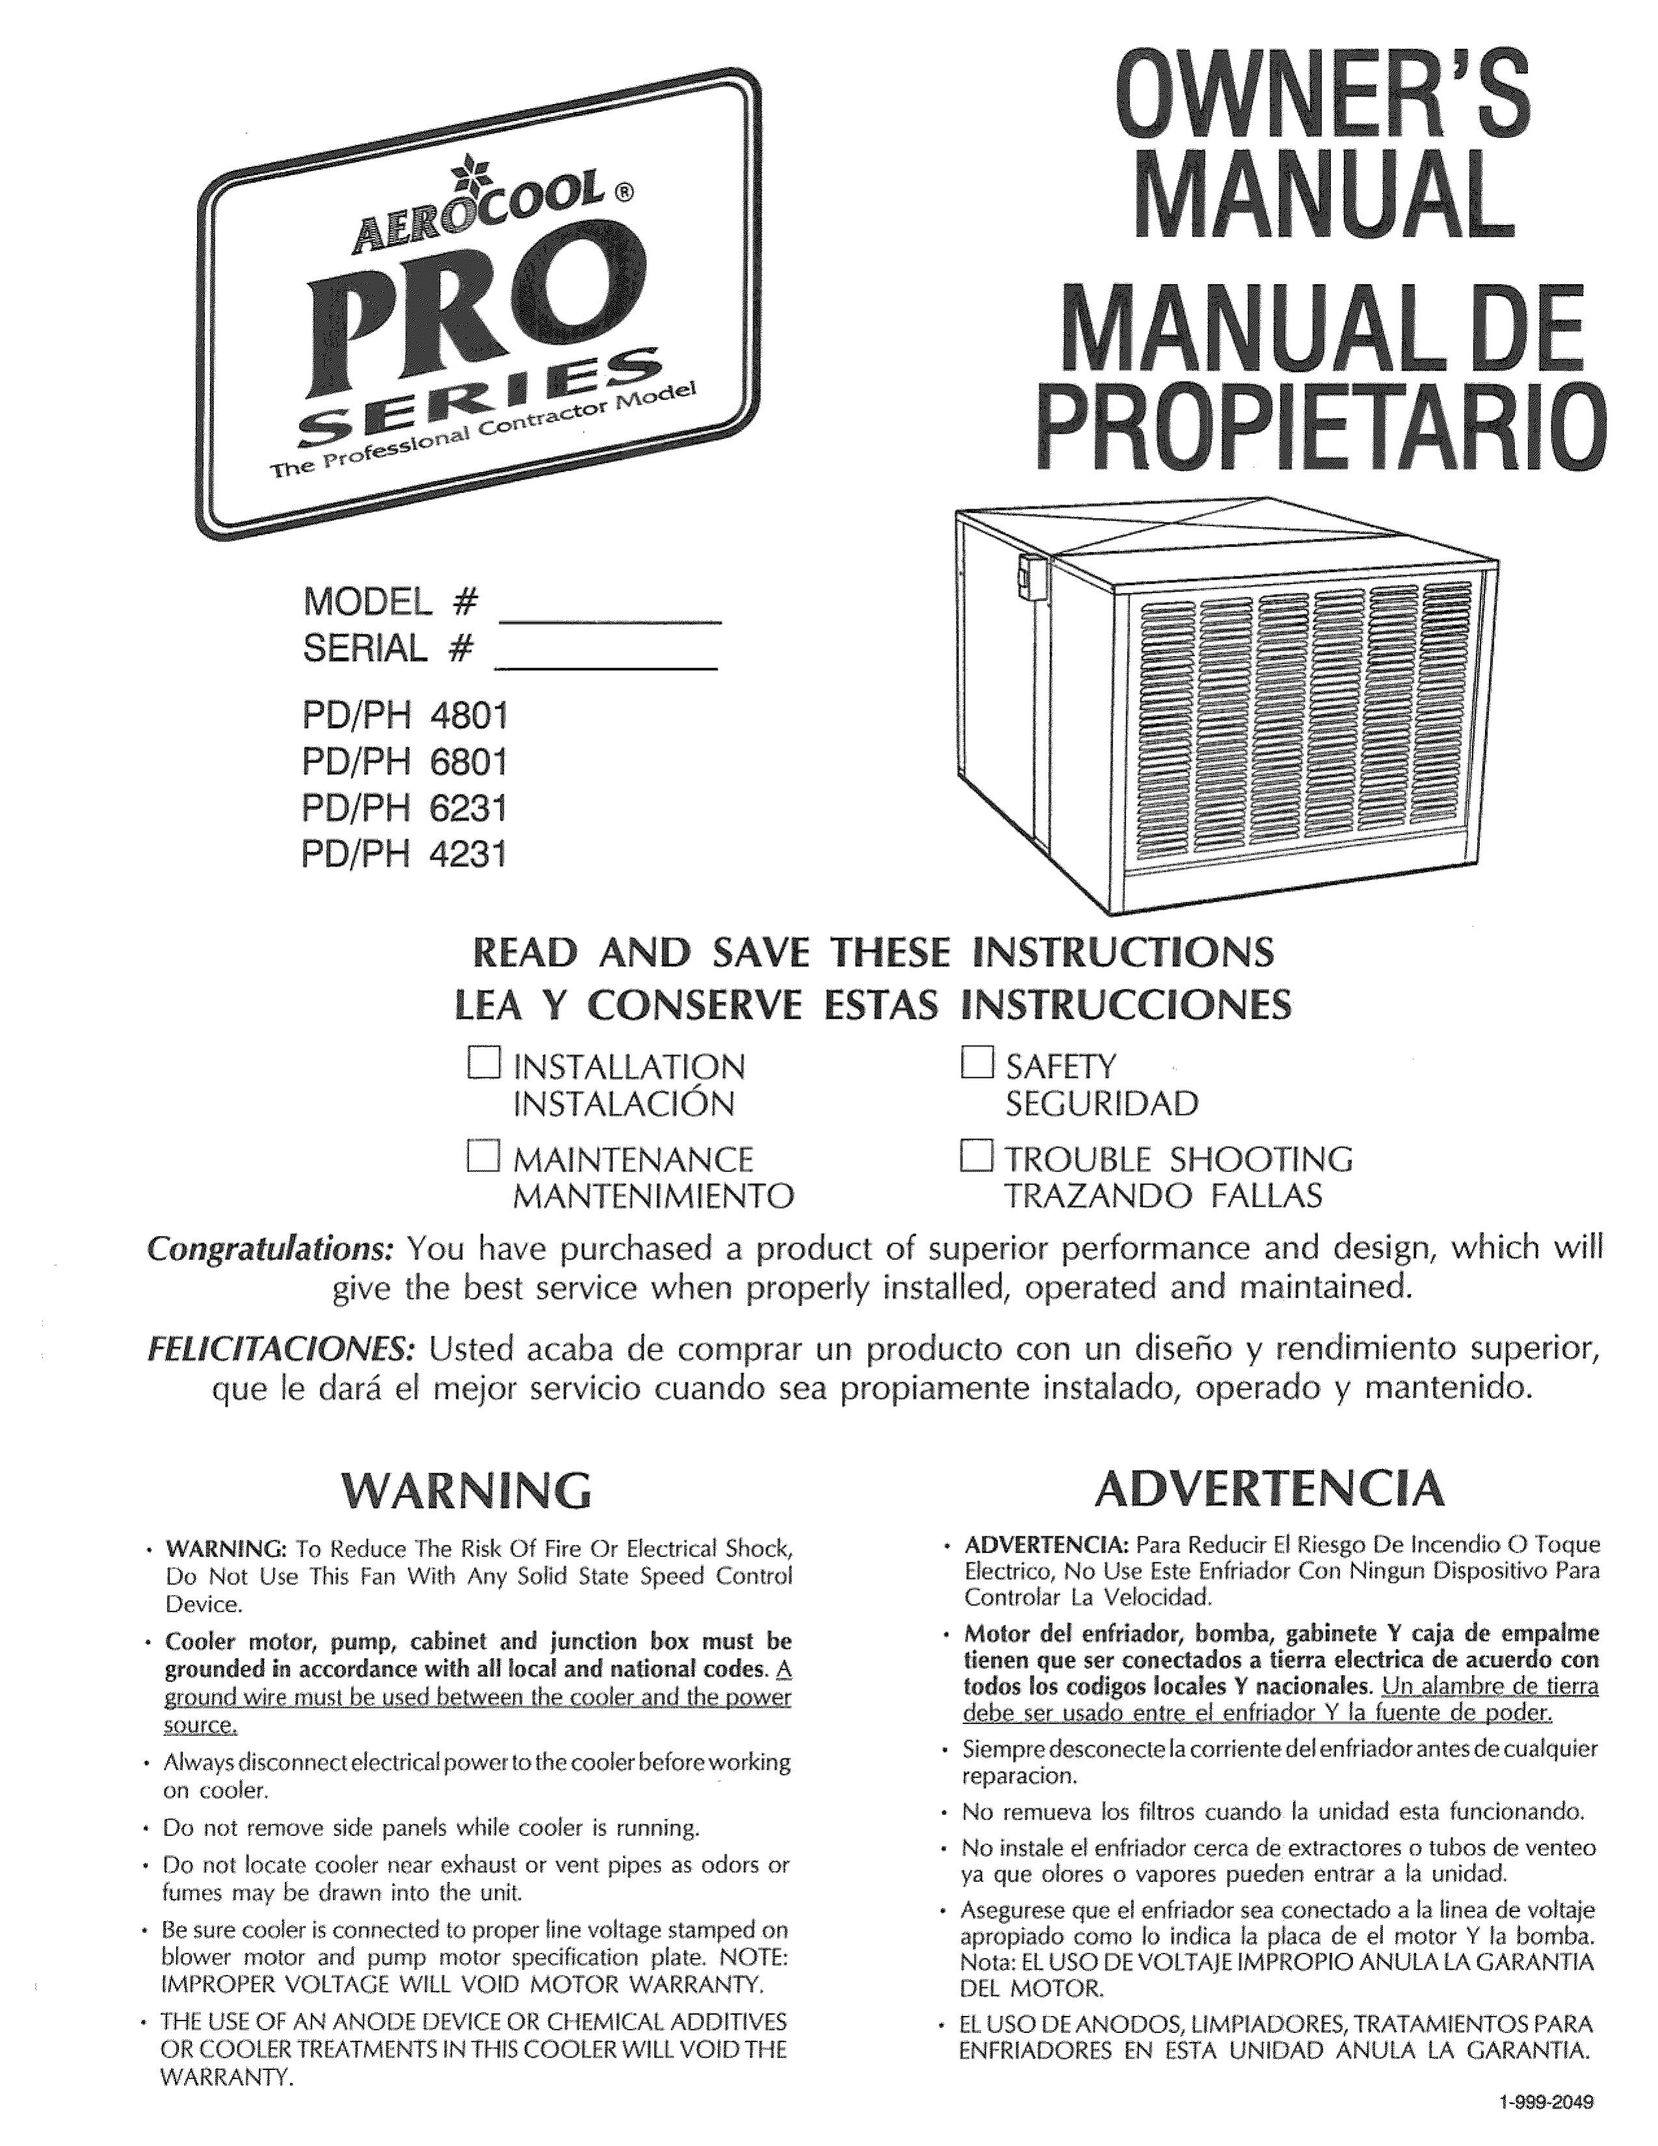 Sears PH4231 Air Conditioner User Manual